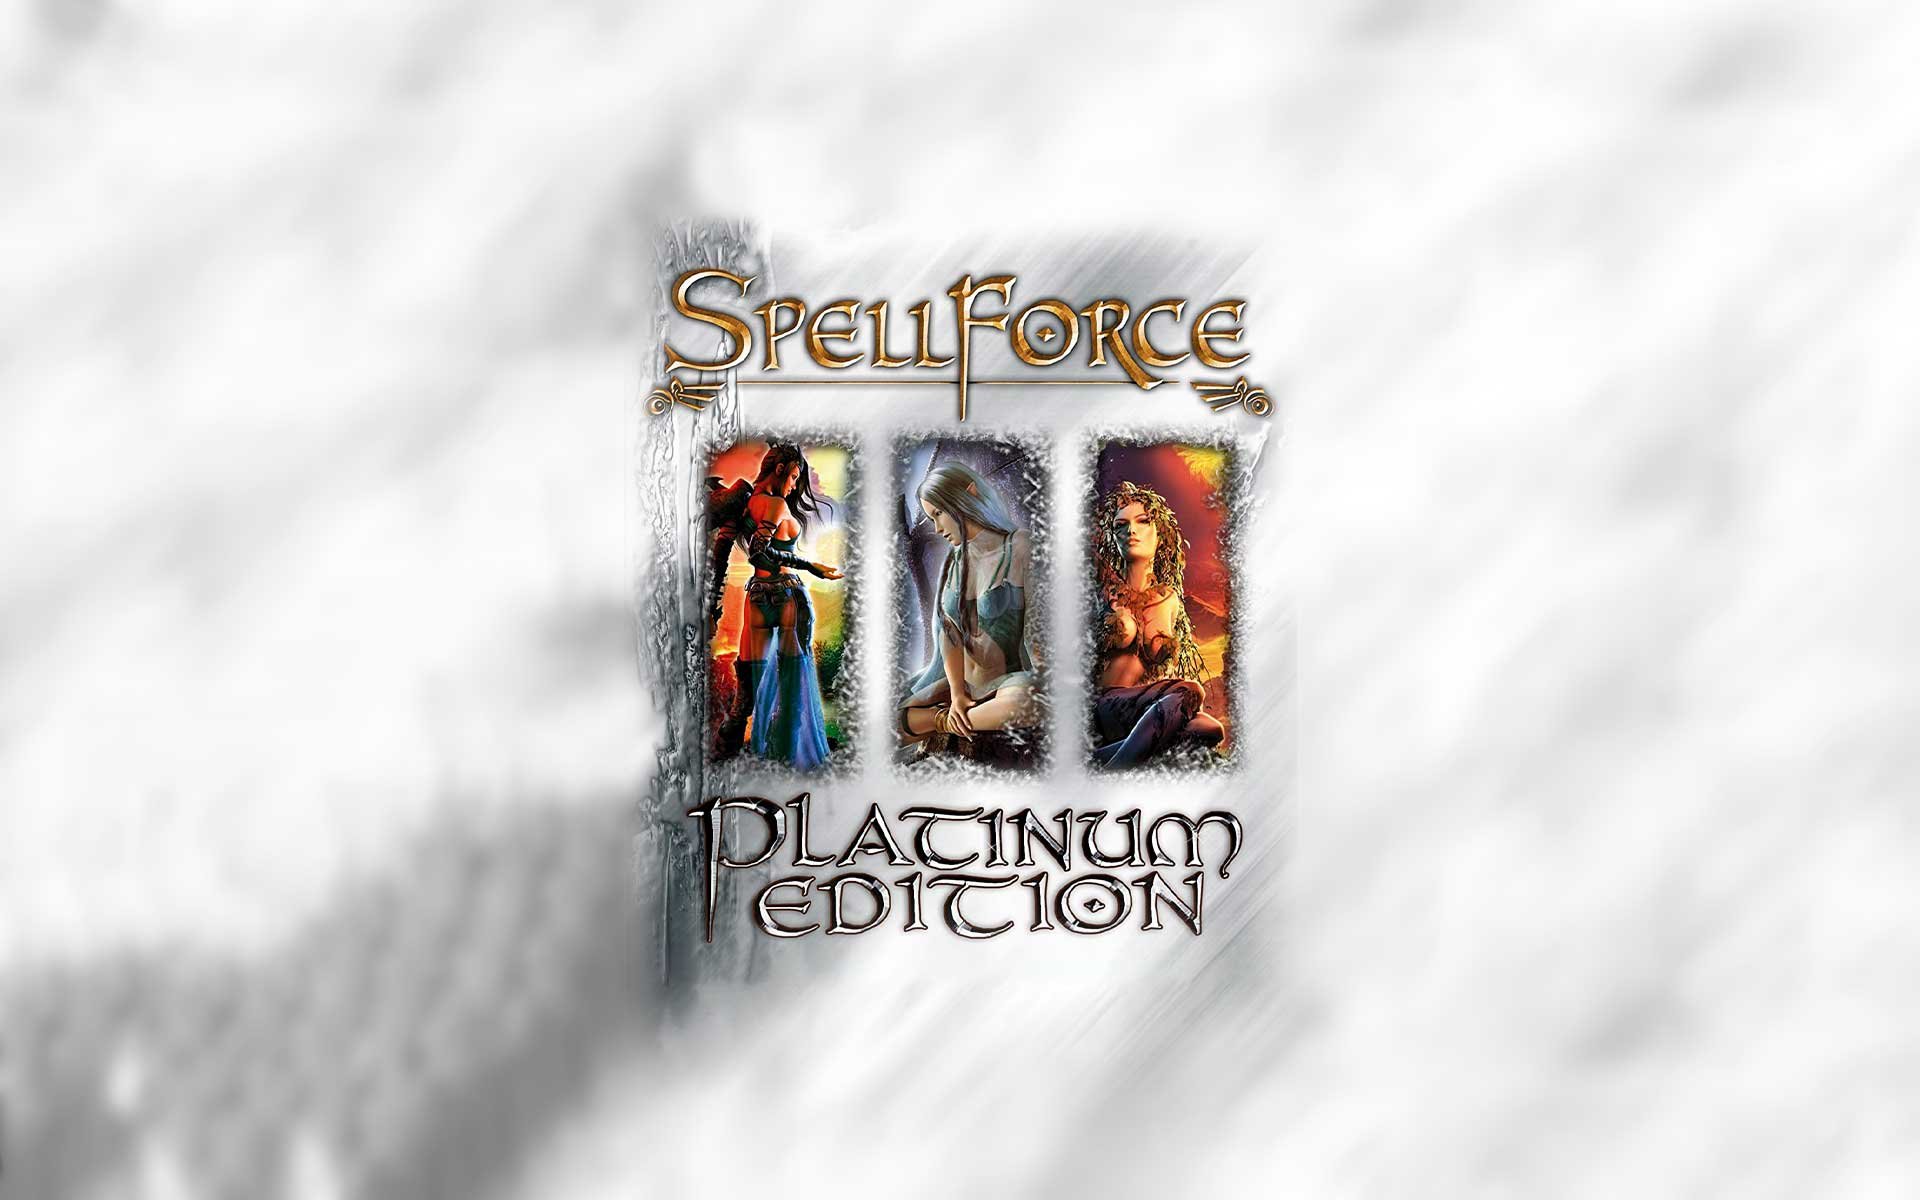 Compre SpellForce Platinum Edition a partir de R$ 16.99